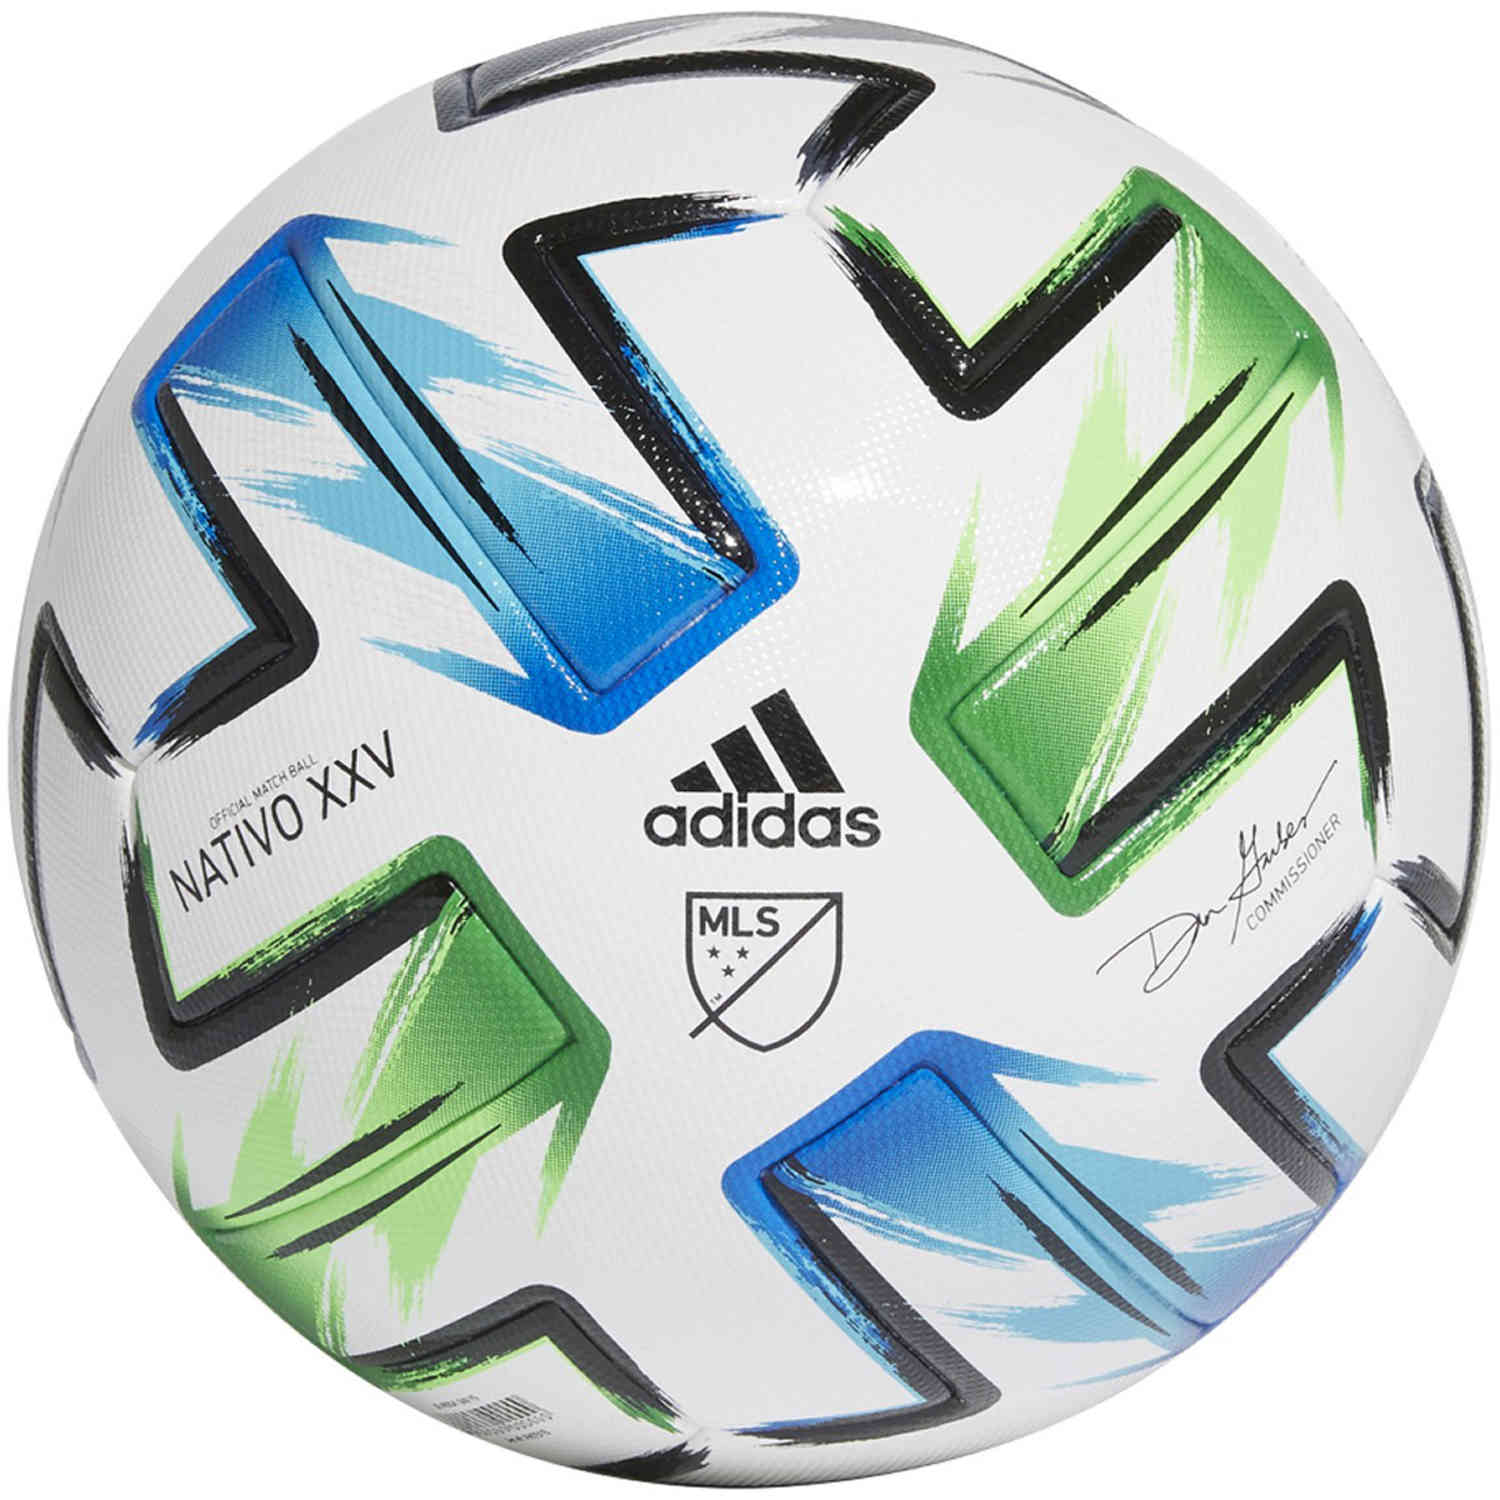 adidas MLS Pro Official Match Soccer 